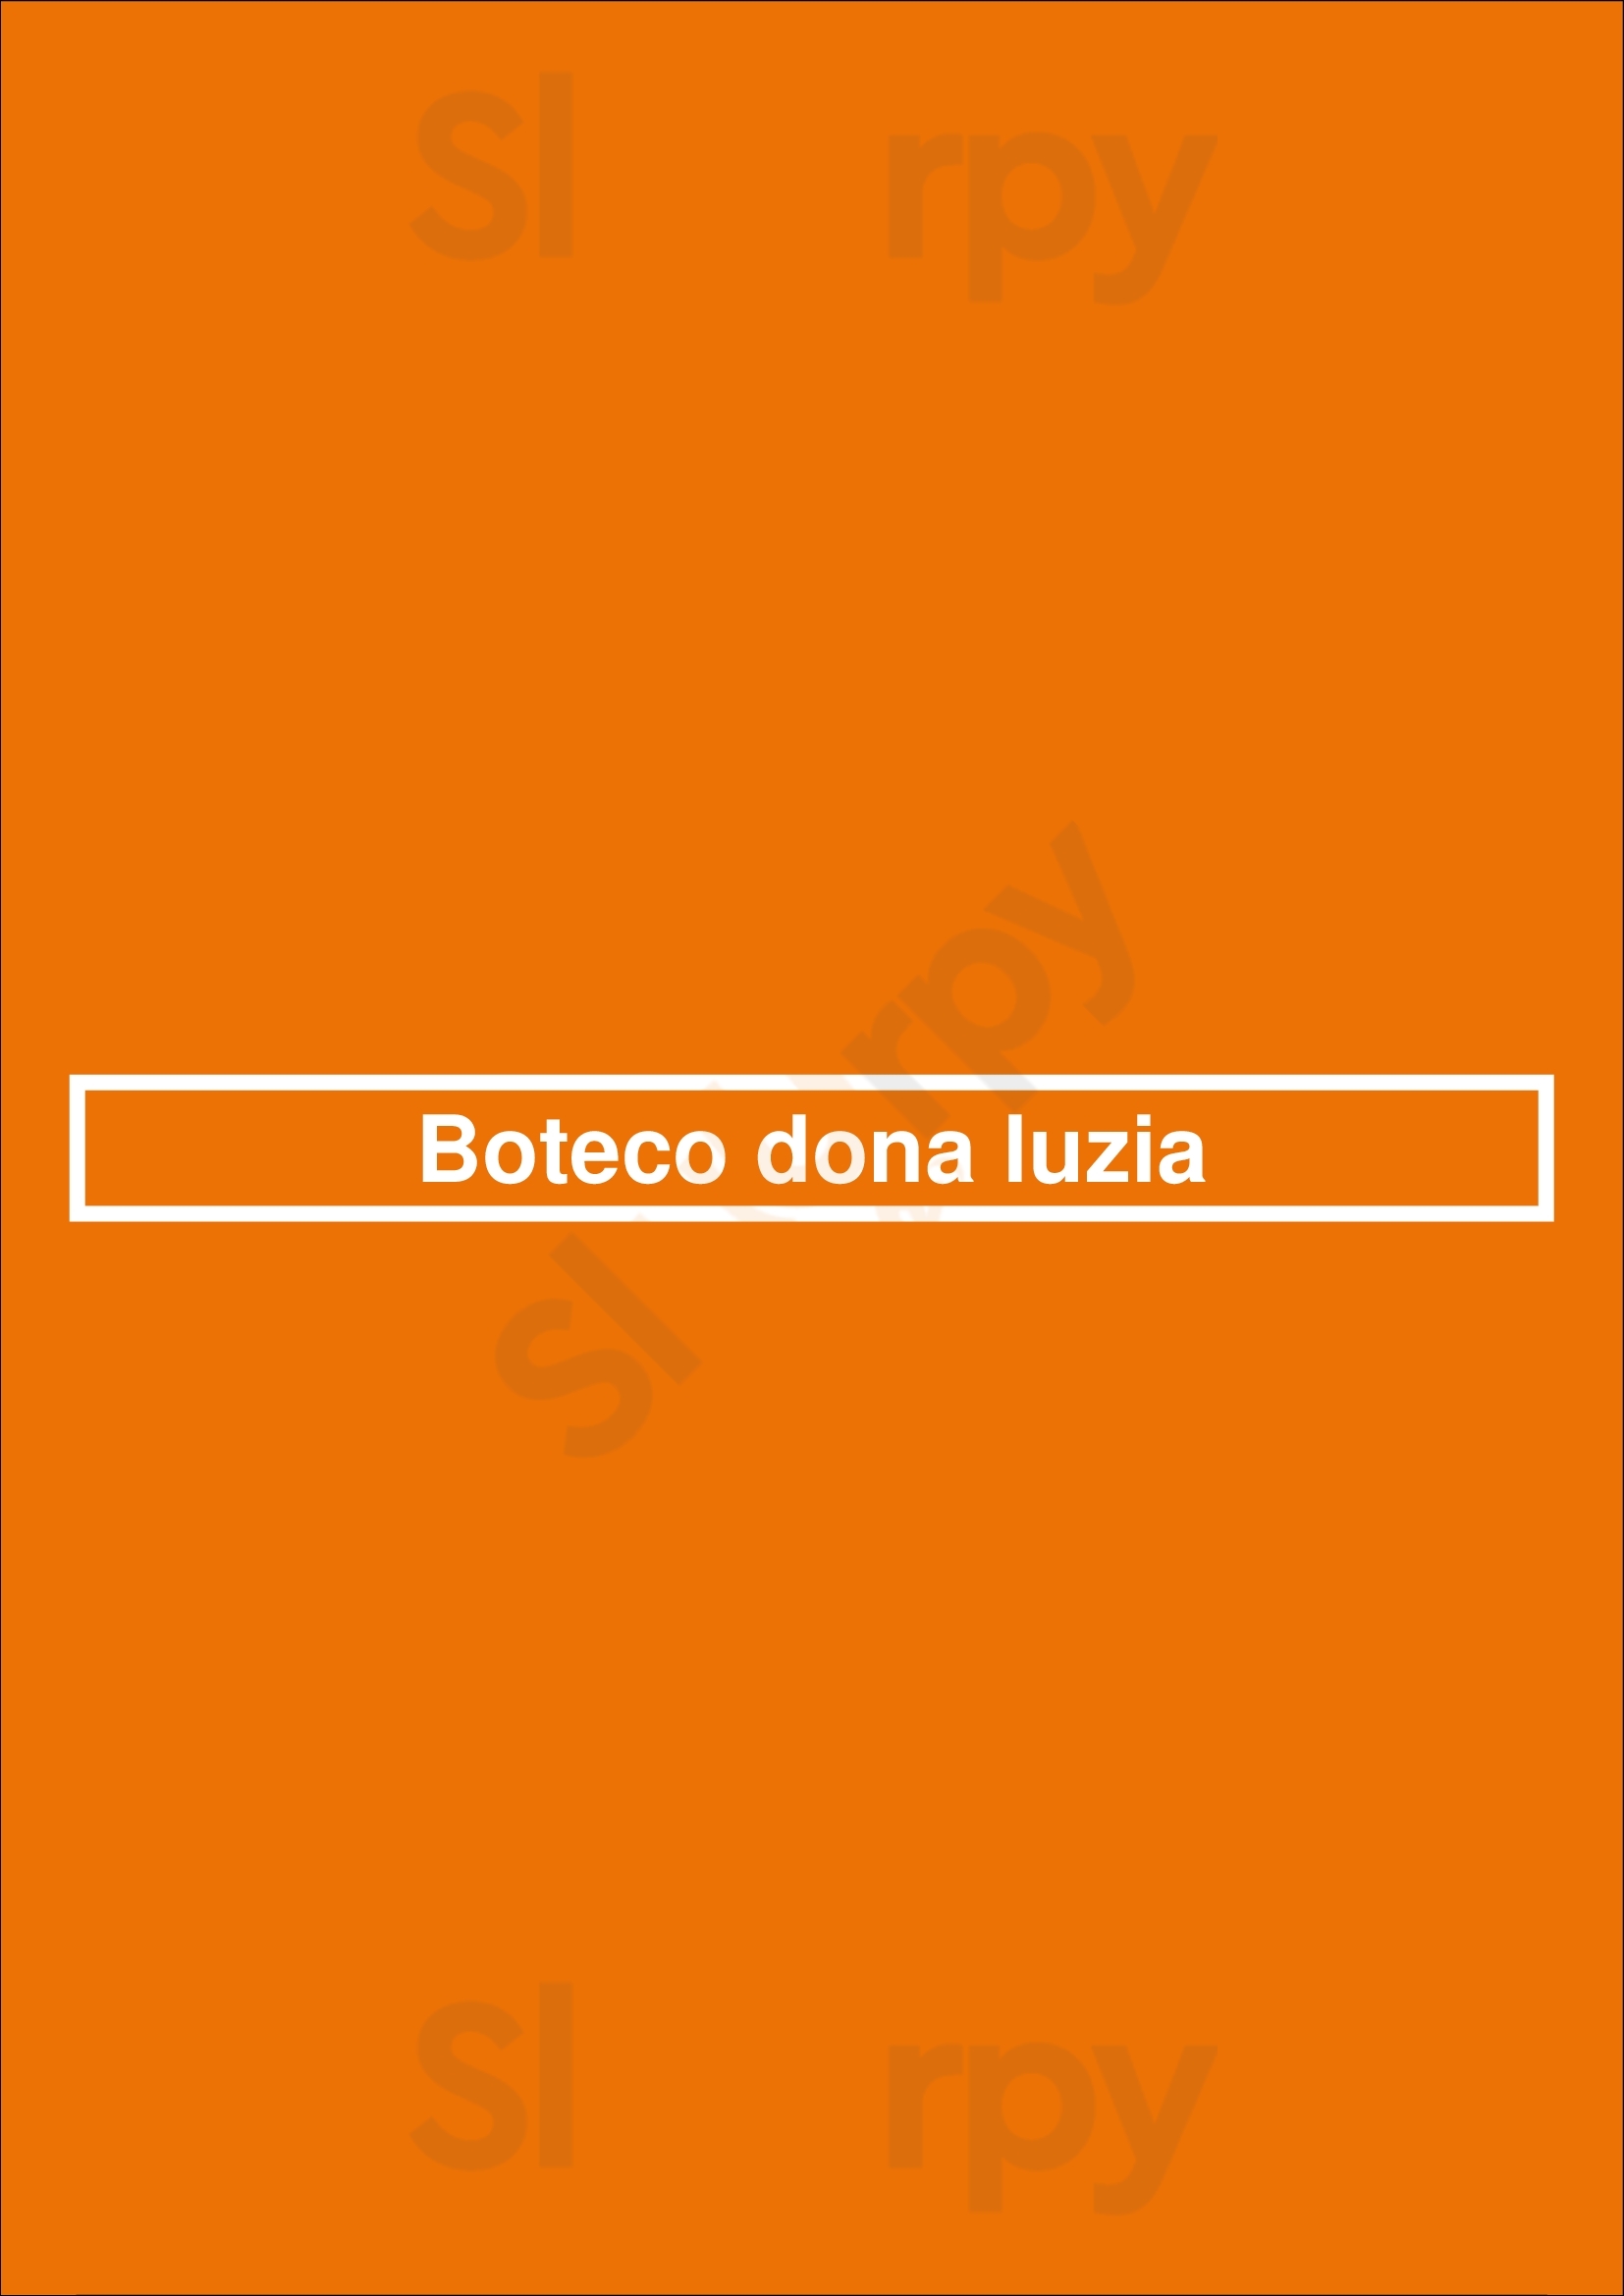 Boteco Dona Luzia Lisboa Menu - 1